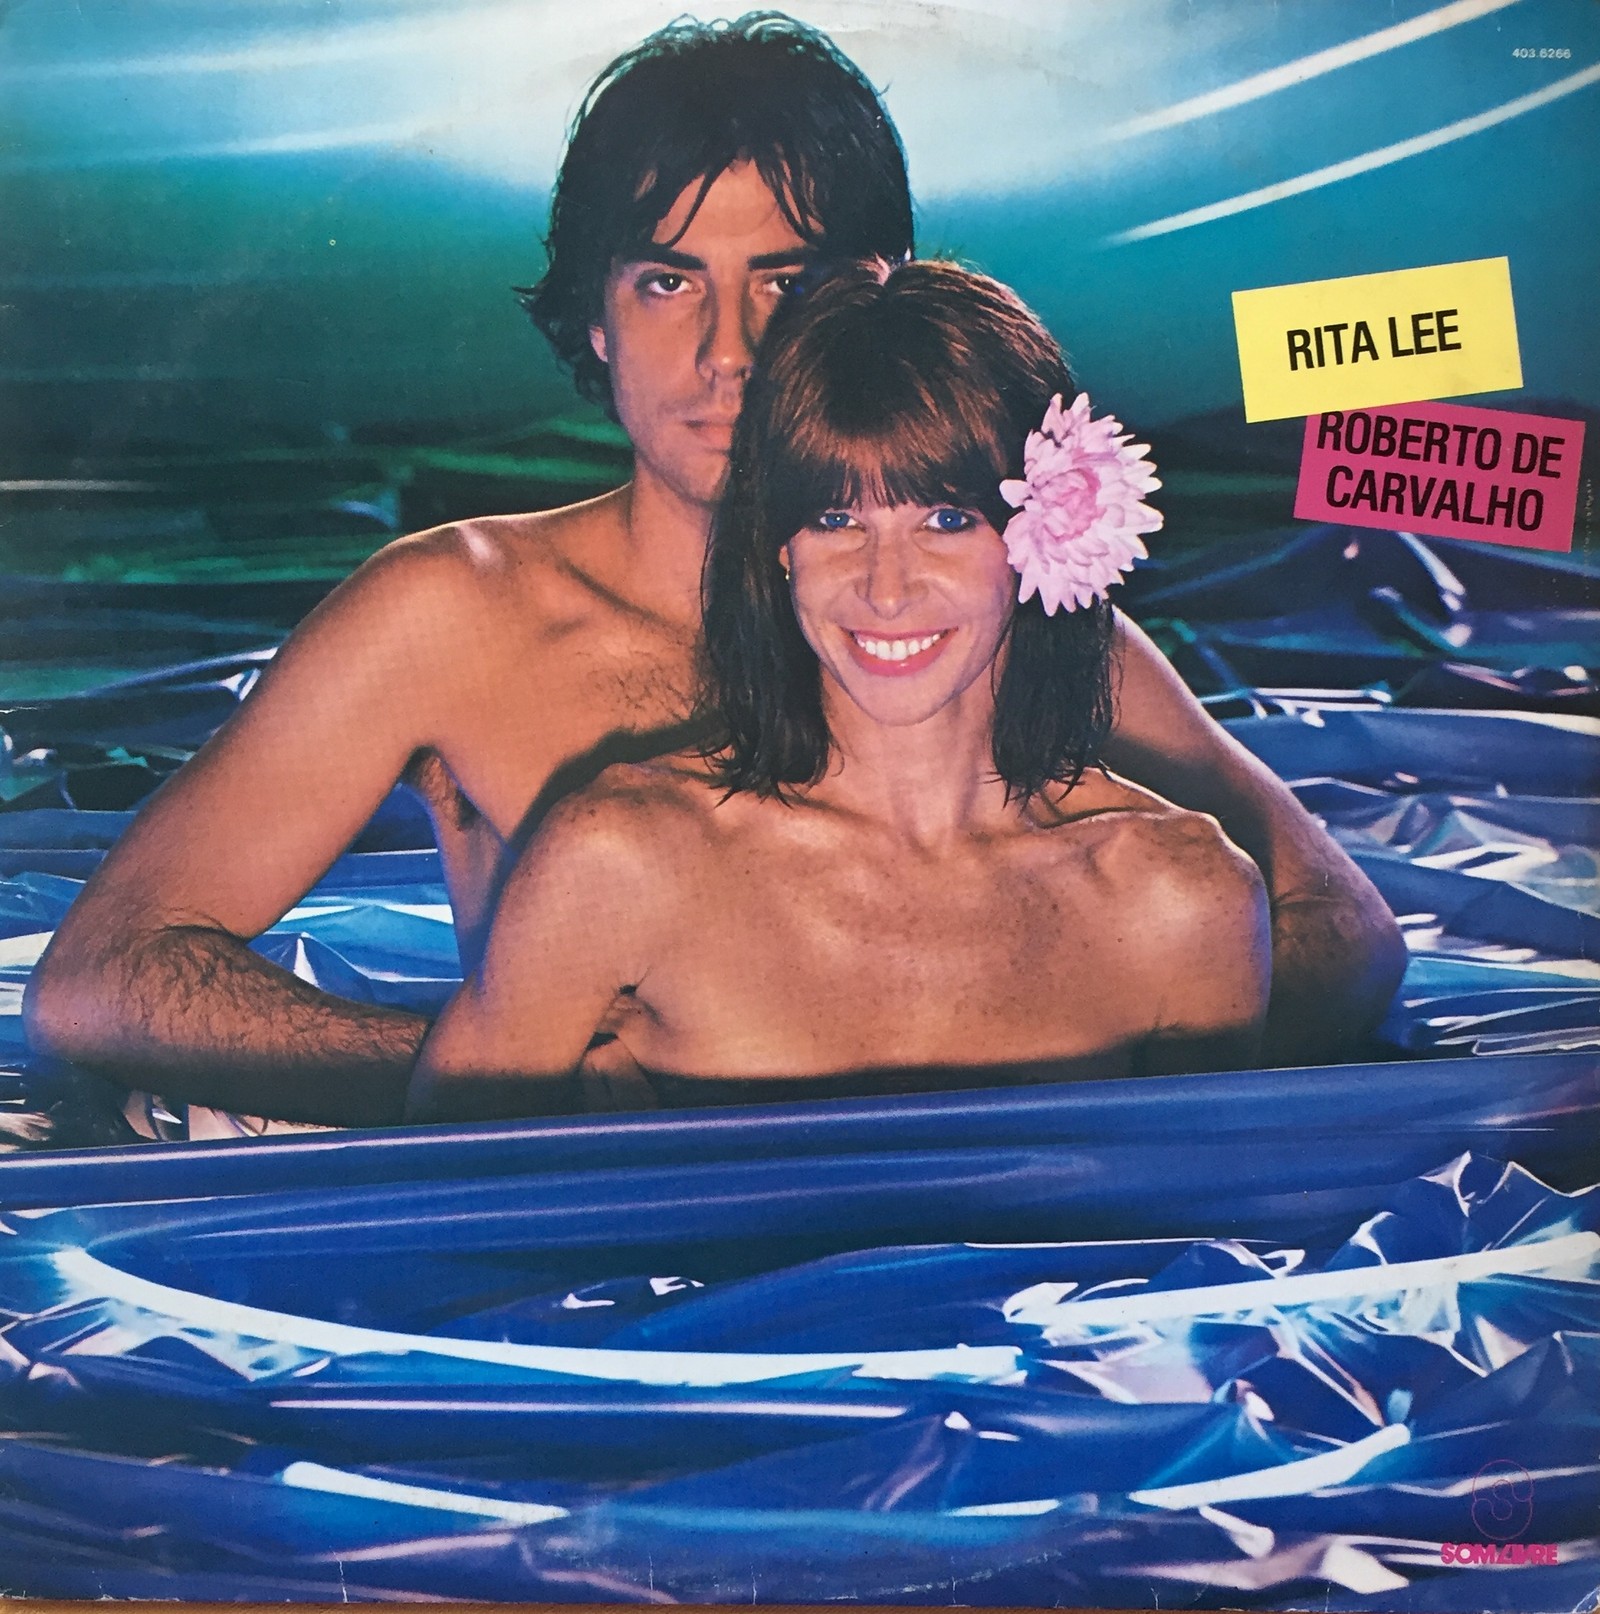 Capa do álbum "Rita Lee Roberto de Carvalho", de Rita Lee e Roberto de Carvalho, de 1982  — Reprodução